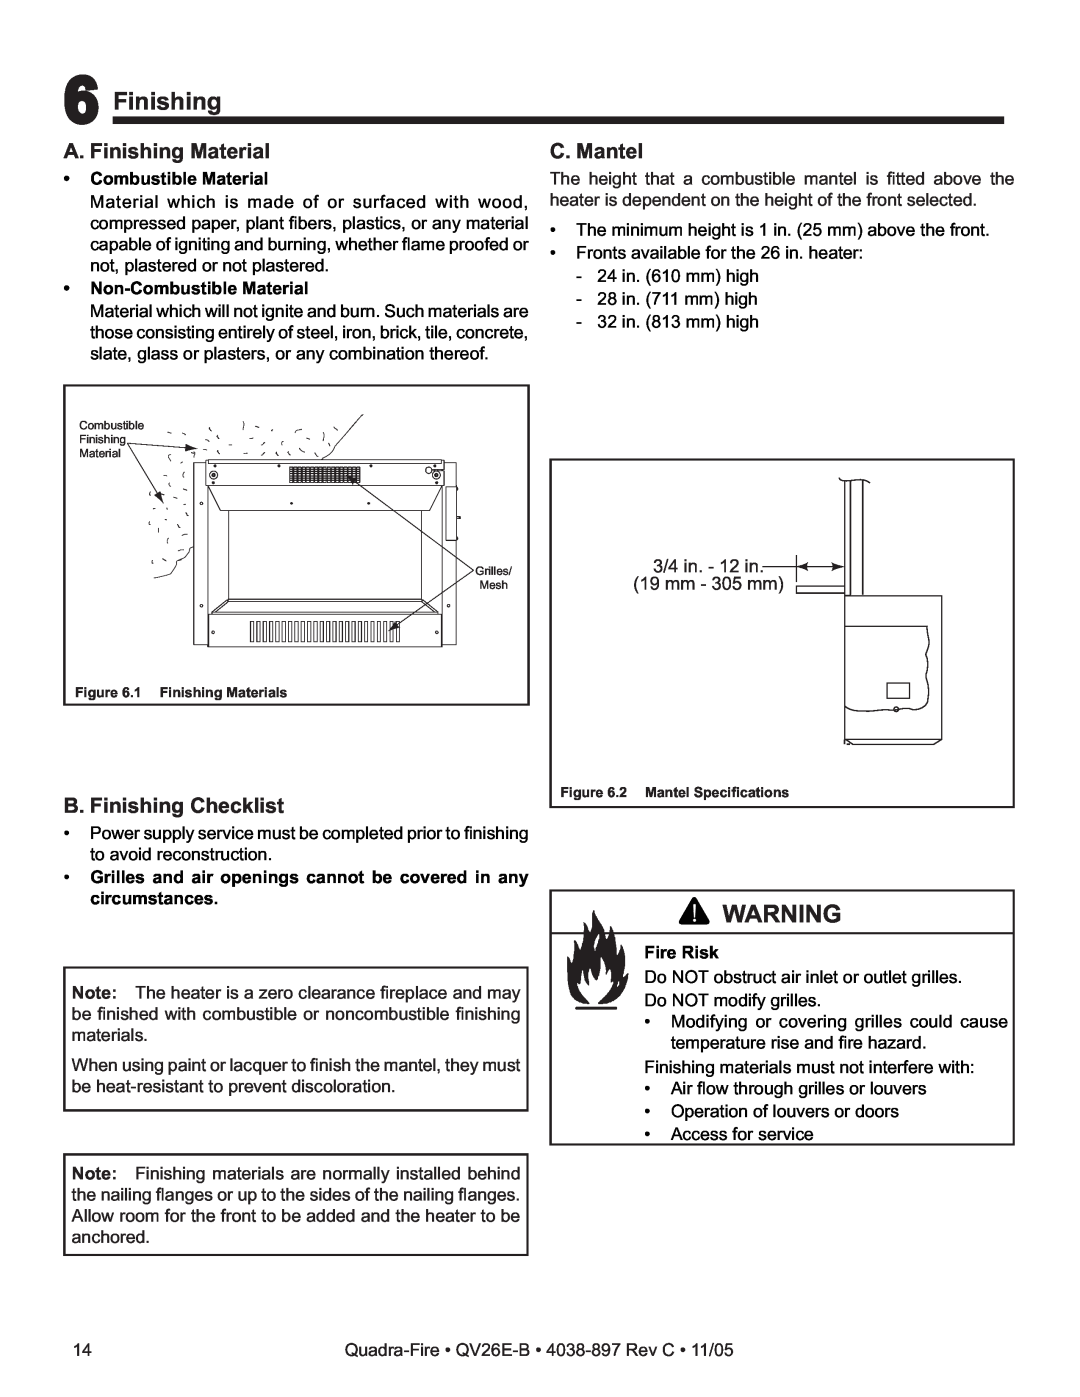 Quadra-Fire QV26E-B 6Finishing, A. Finishing Material, C. Mantel, B. Finishing Checklist, 3/4 in. - 12 in 19 mm - 305 mm 